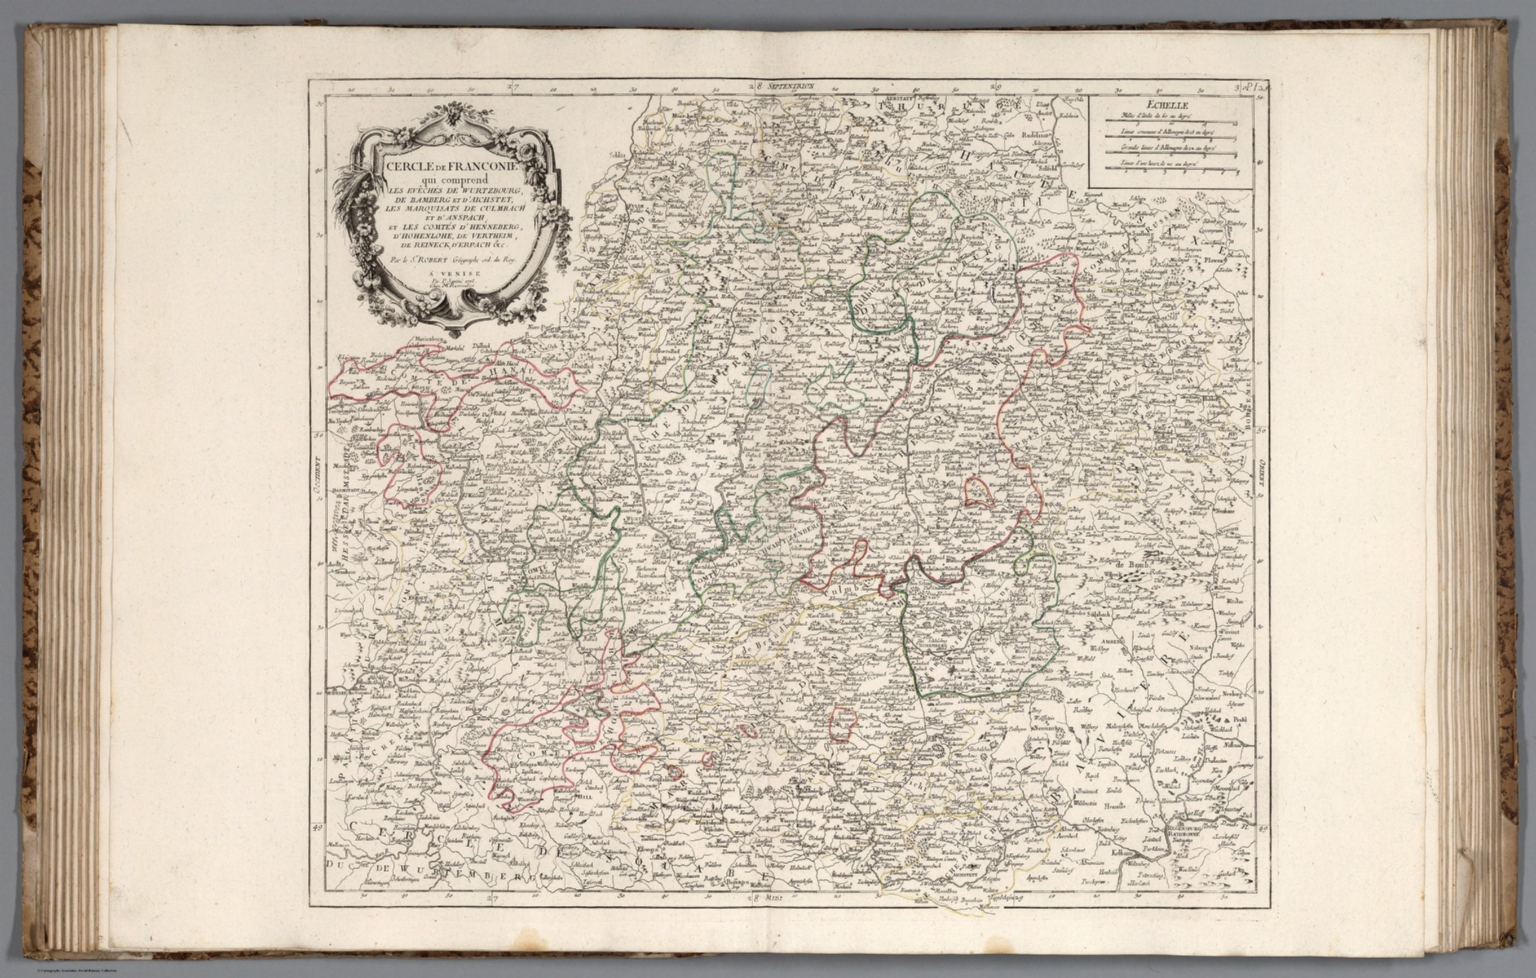 31. Cercle de Franconie. - David Rumsey Historical Map Collection